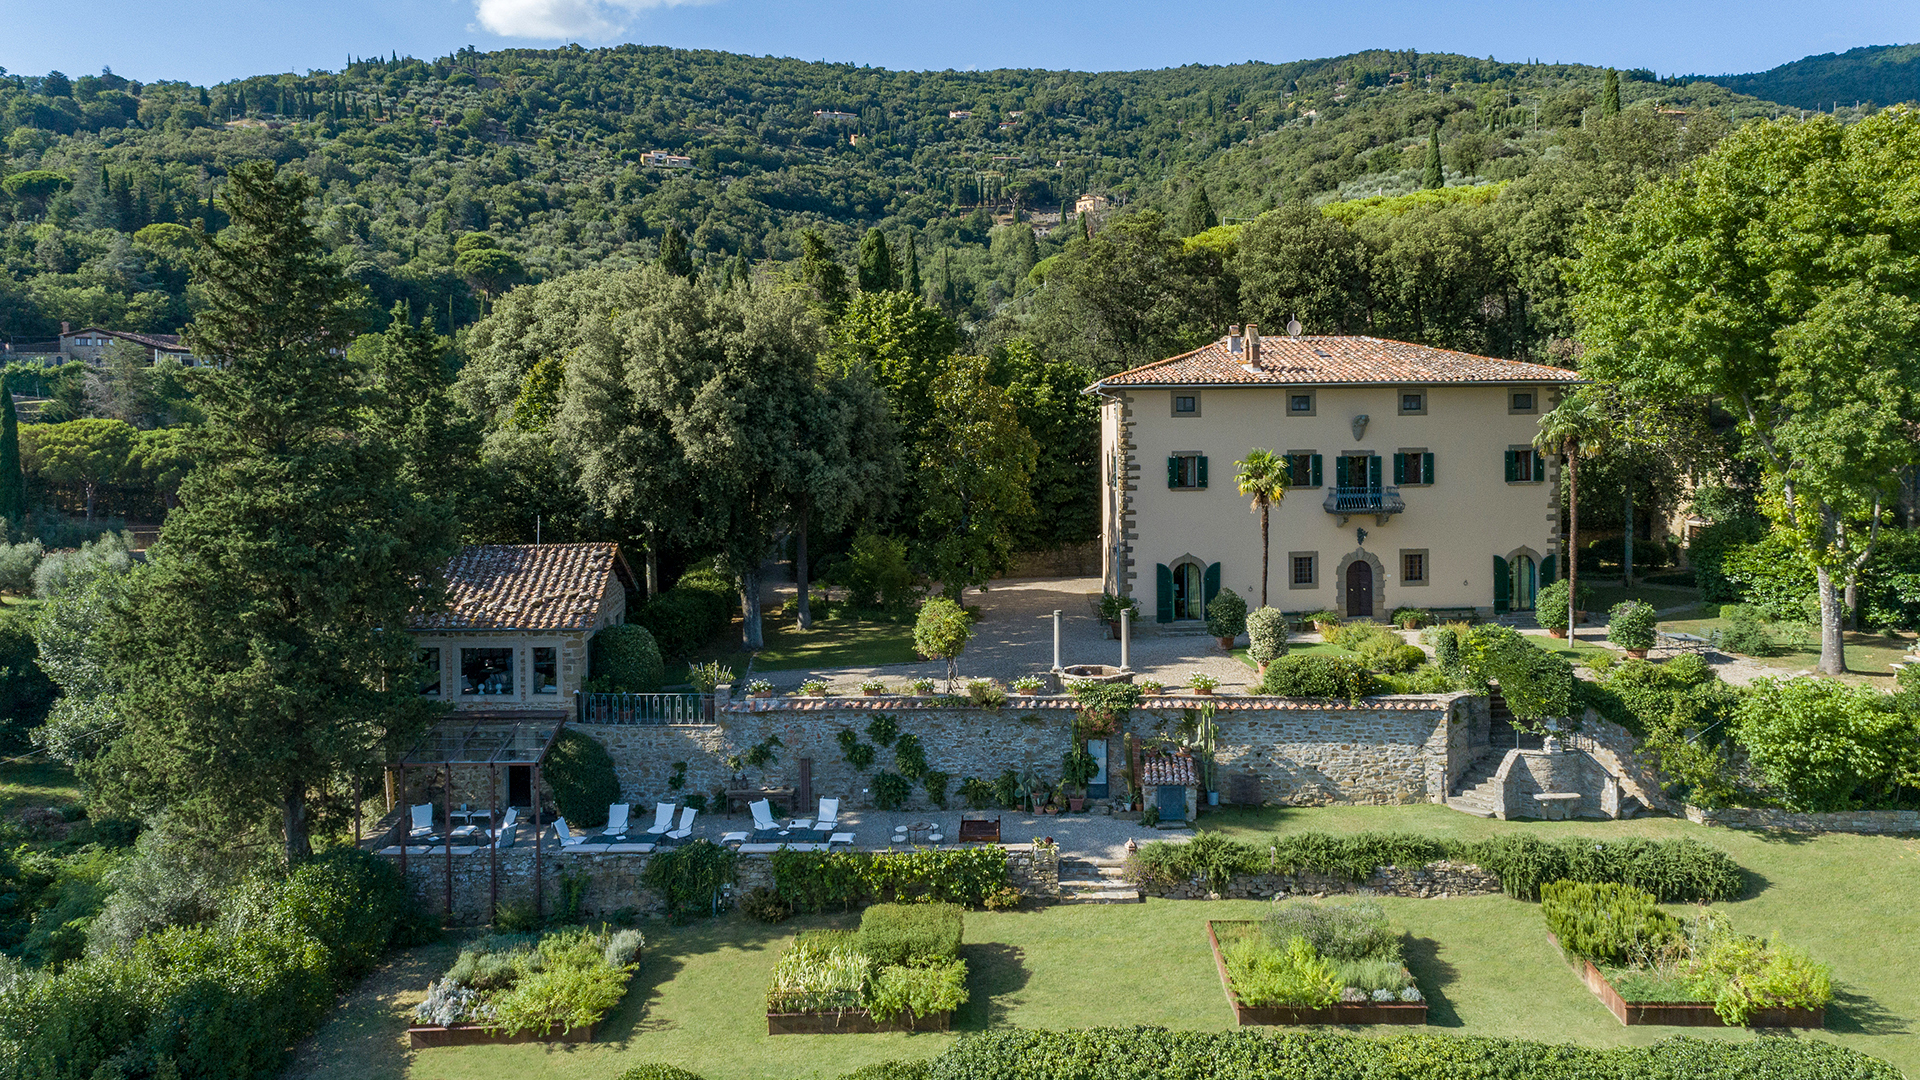 Villa Ugo - Accommodation in Tuscany